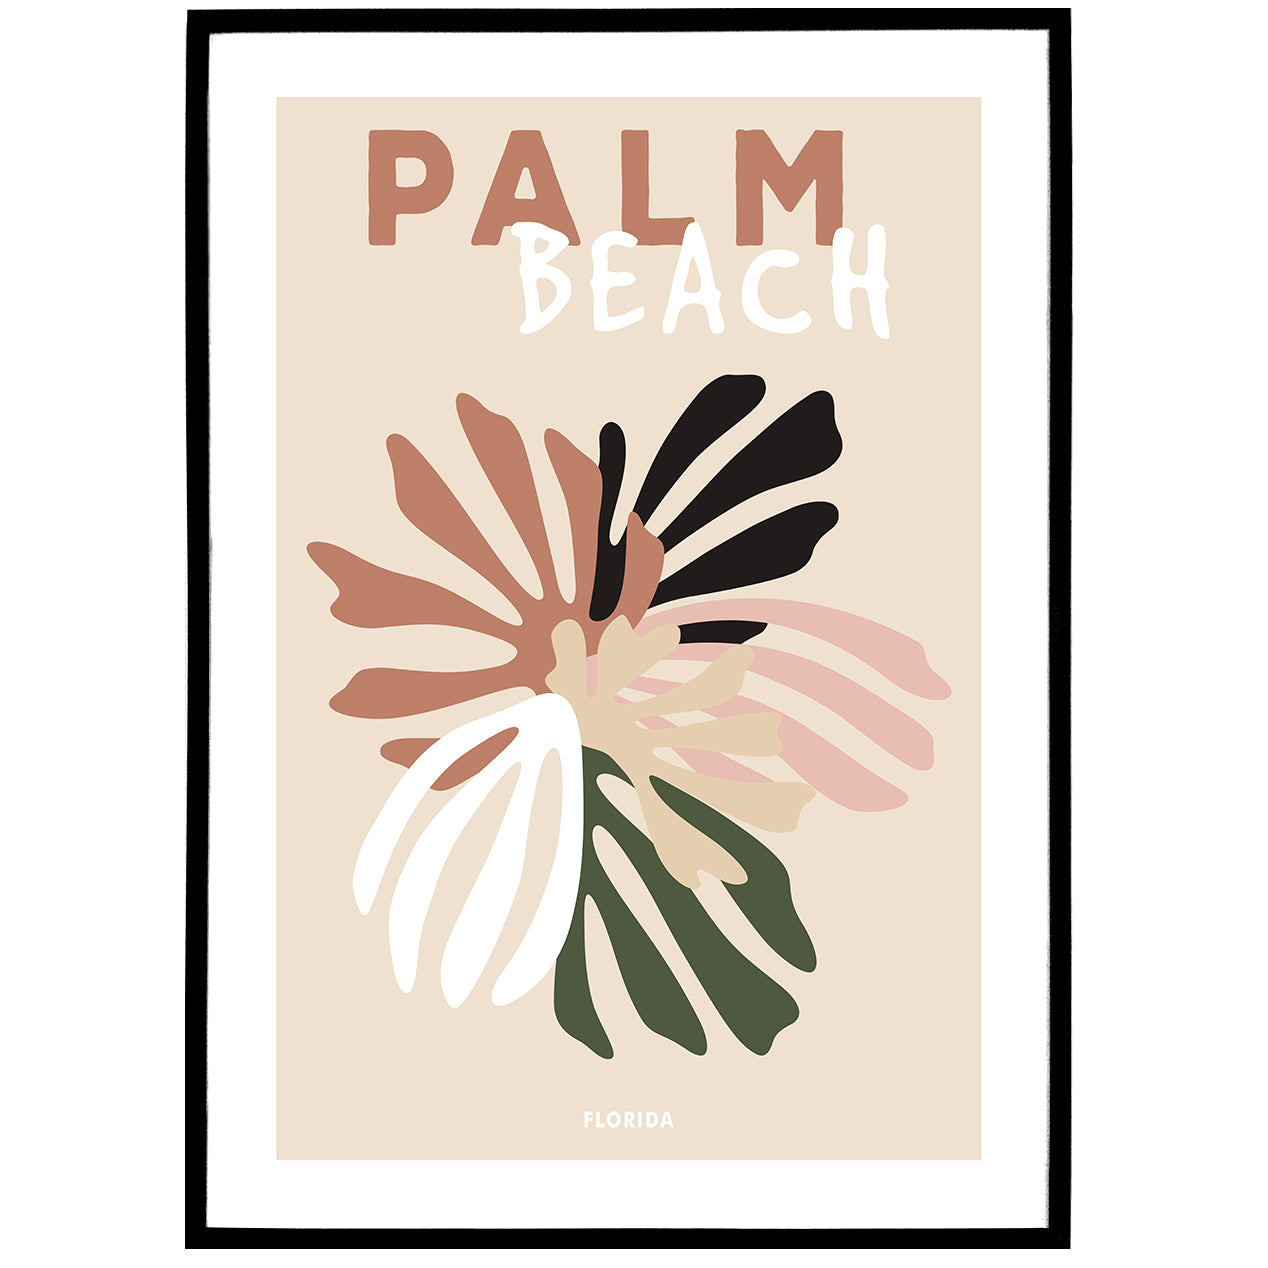 Palm Beach Florida Poster